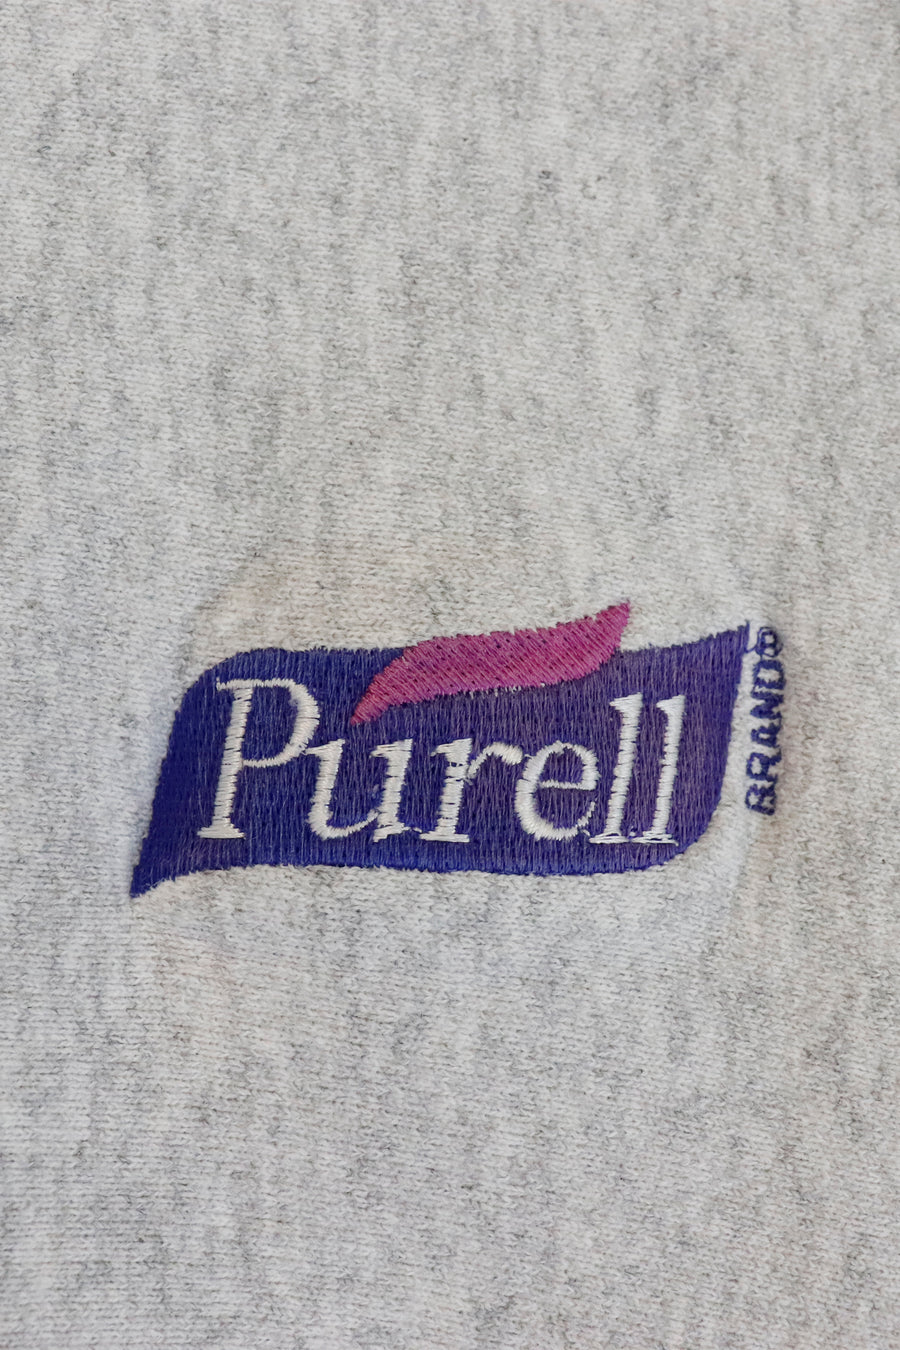 Vintage Lee Purell Brand Embroidered Logo Sweatshirt Sz L